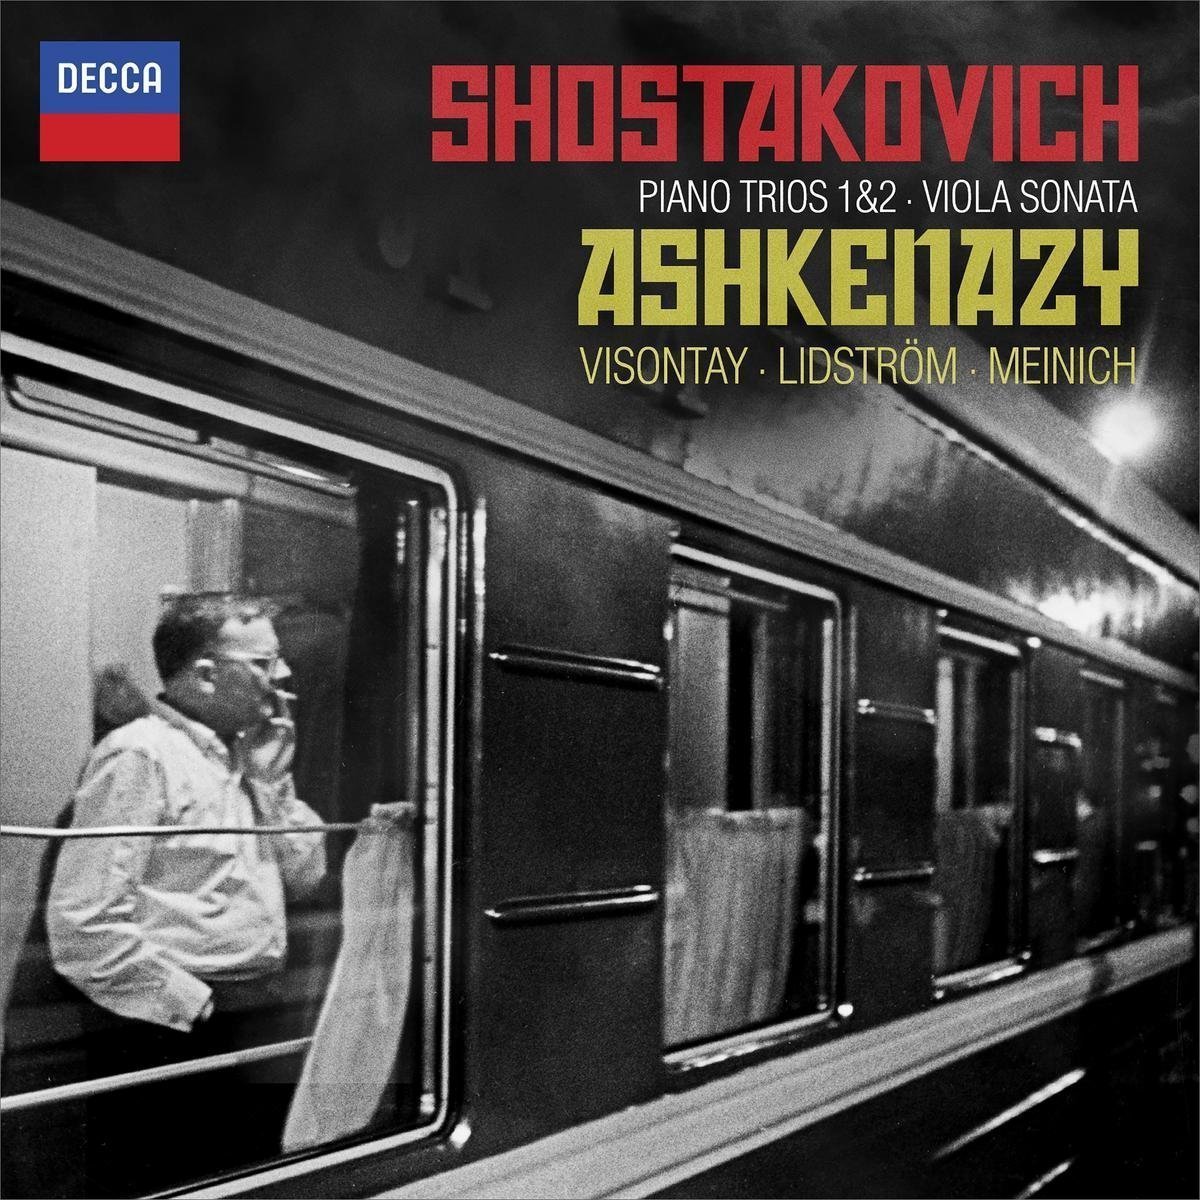 Shostakovich_Piano-Trios_Viola-Sonata_DECCA.jpg